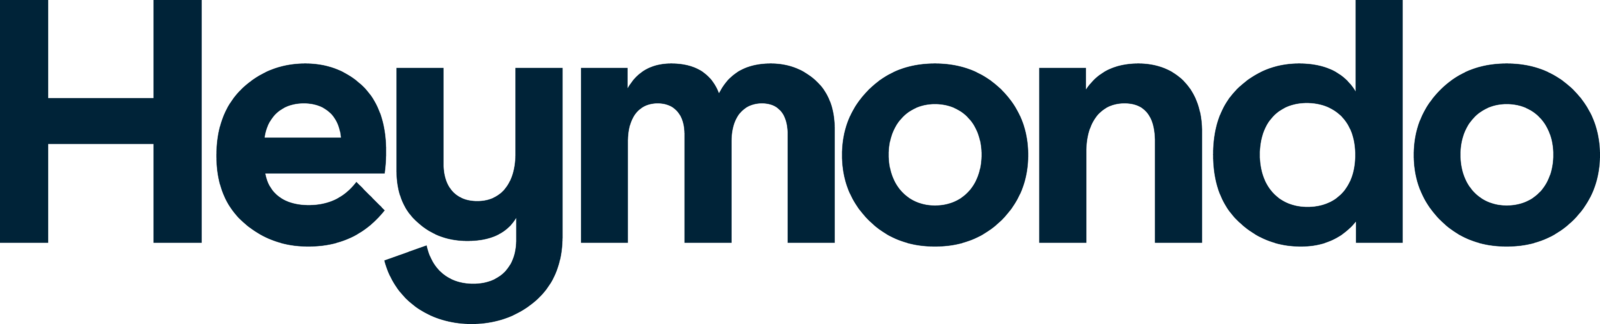 Heymondo logo